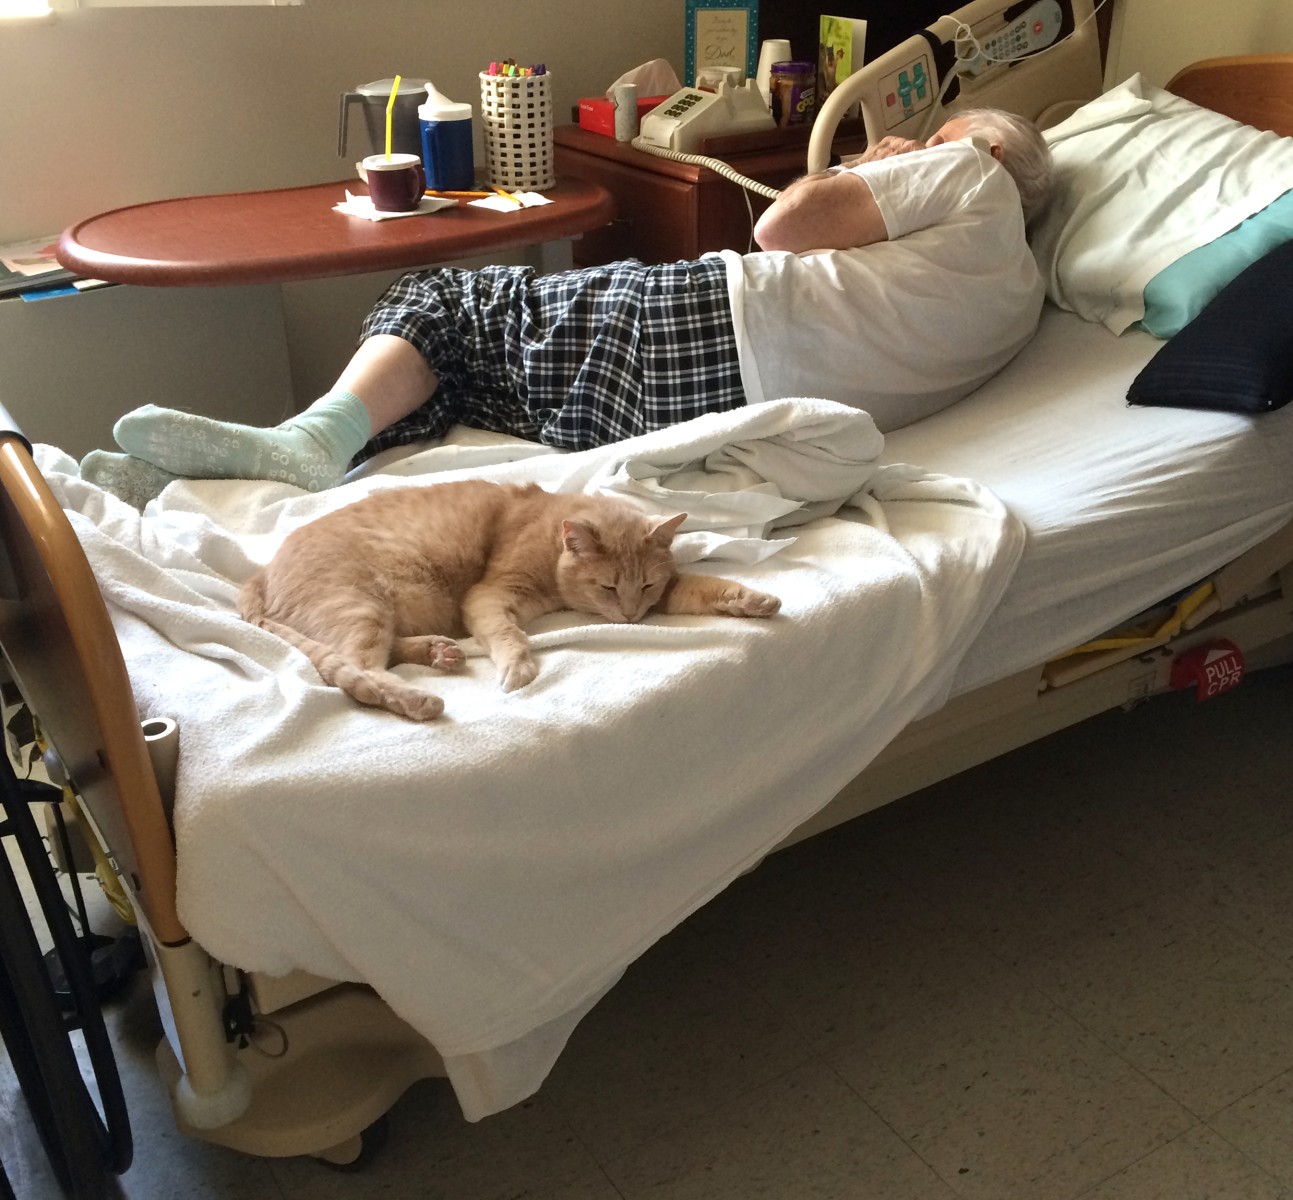 Cat Comforts Ailing Veterans